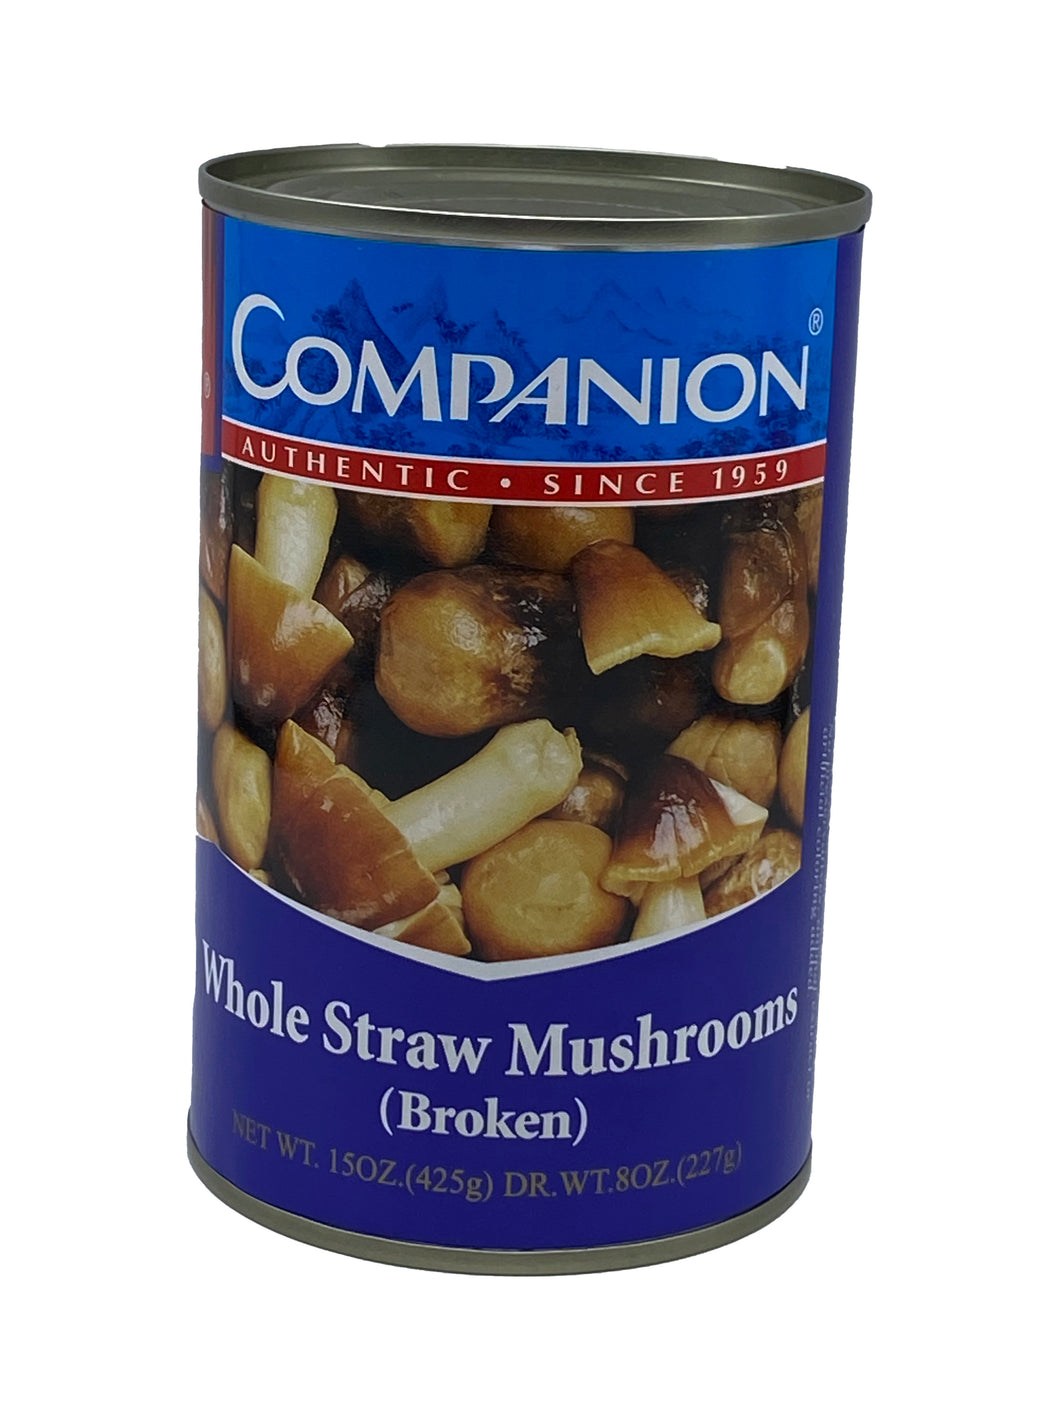 Companion Whole Straw Mushrooms (Broken)